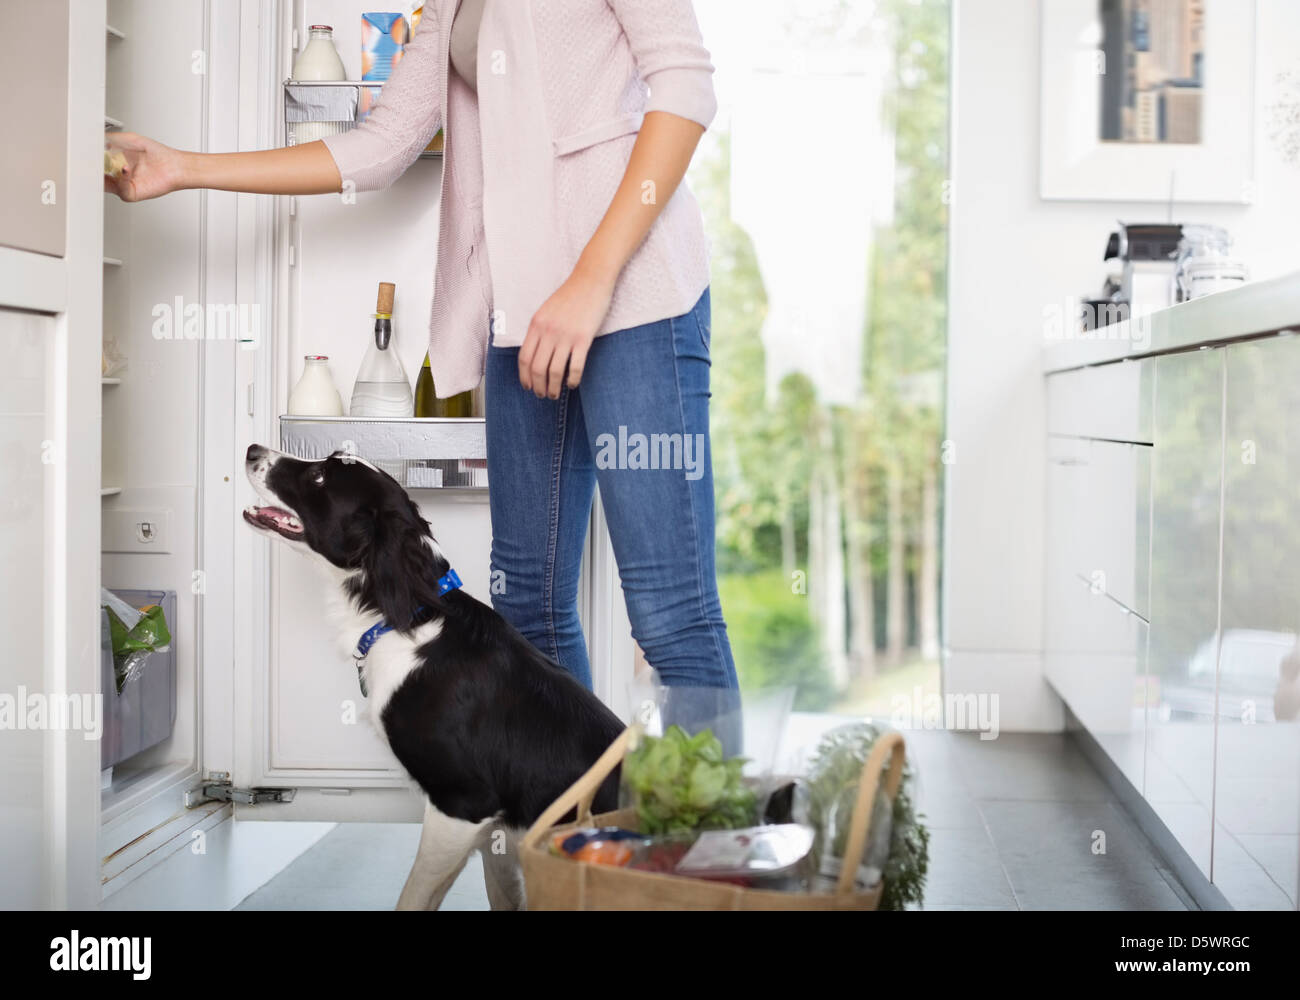 Dog begging for food at open fridge Stock Photo